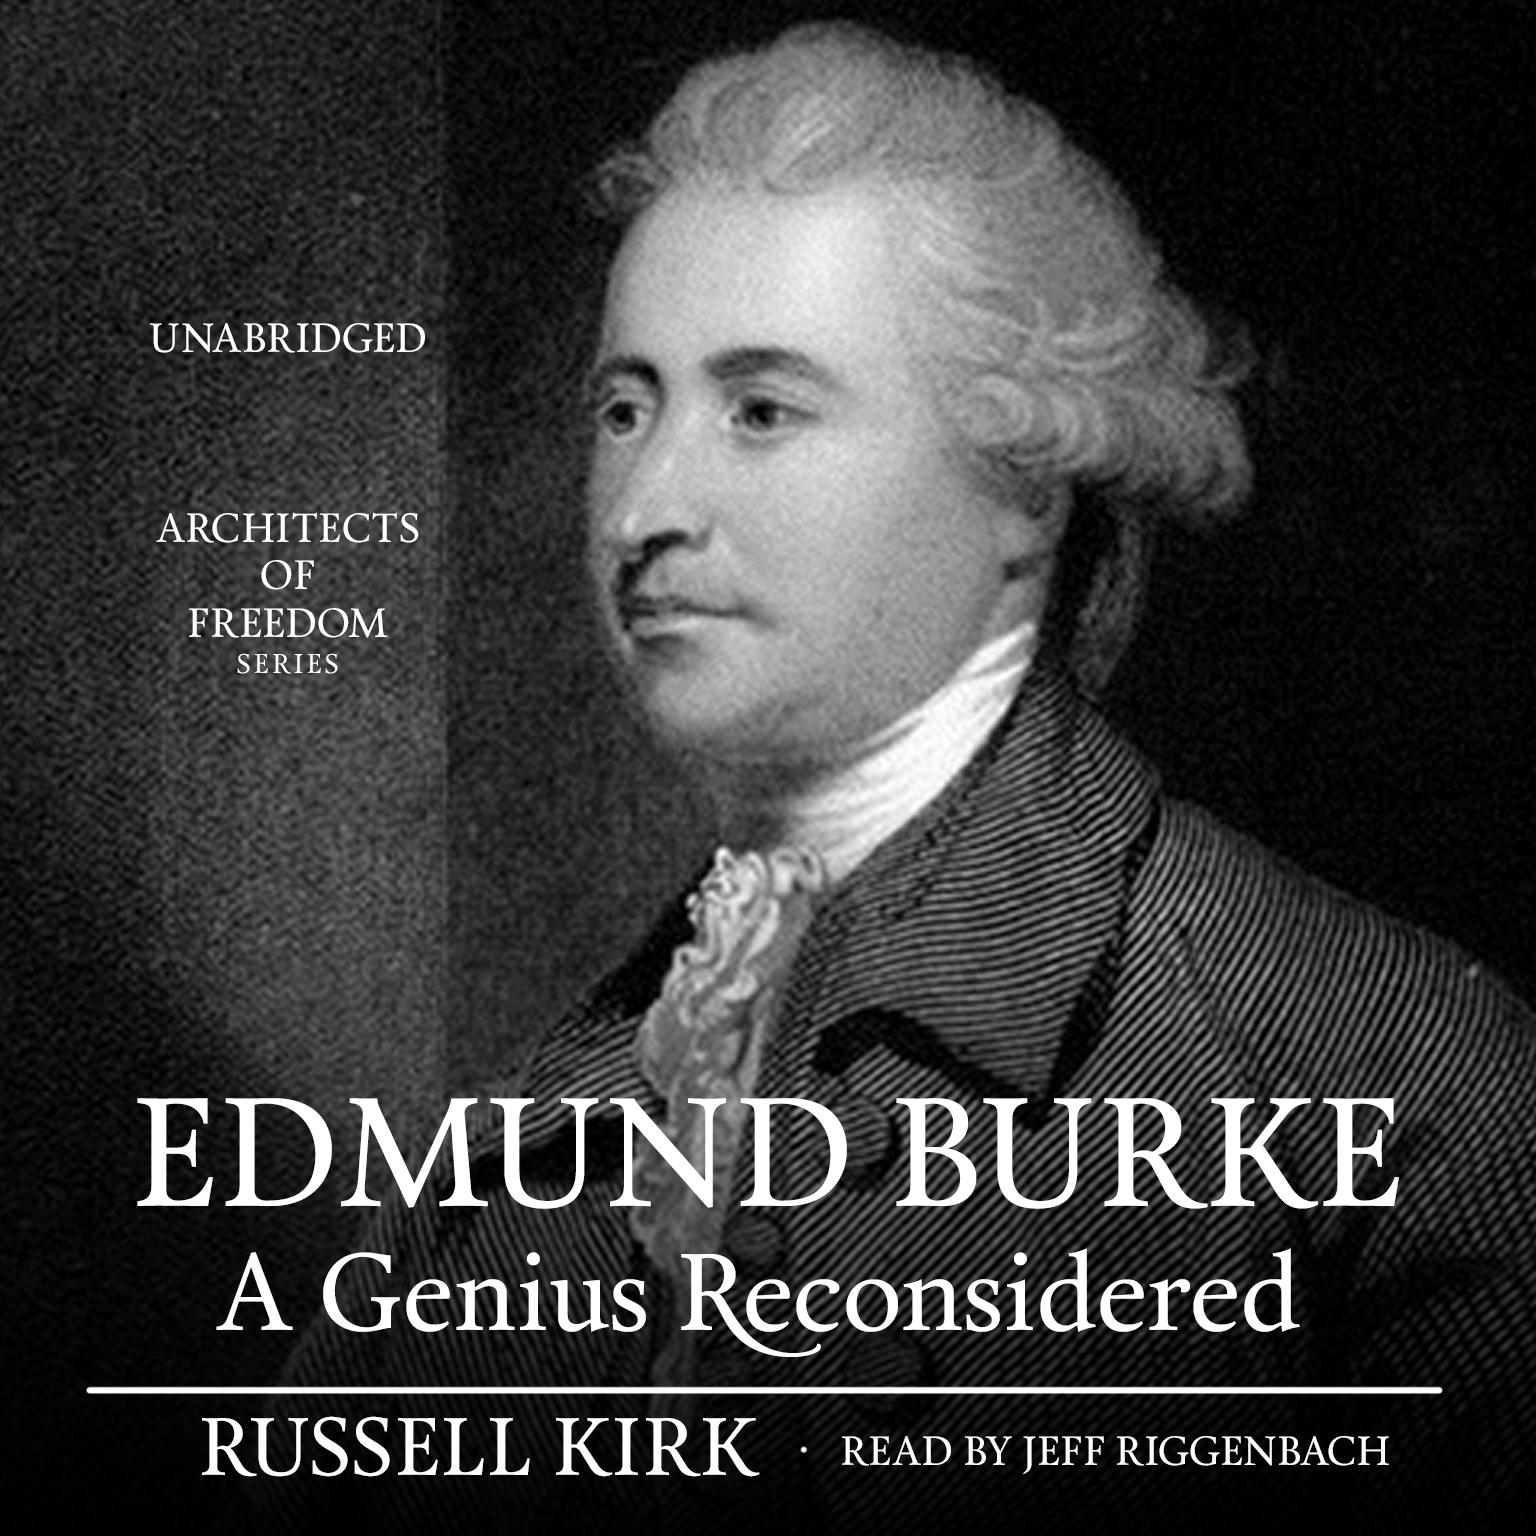 Edmund Burke: A Genius Reconsidered Audiobook, by Russell Kirk